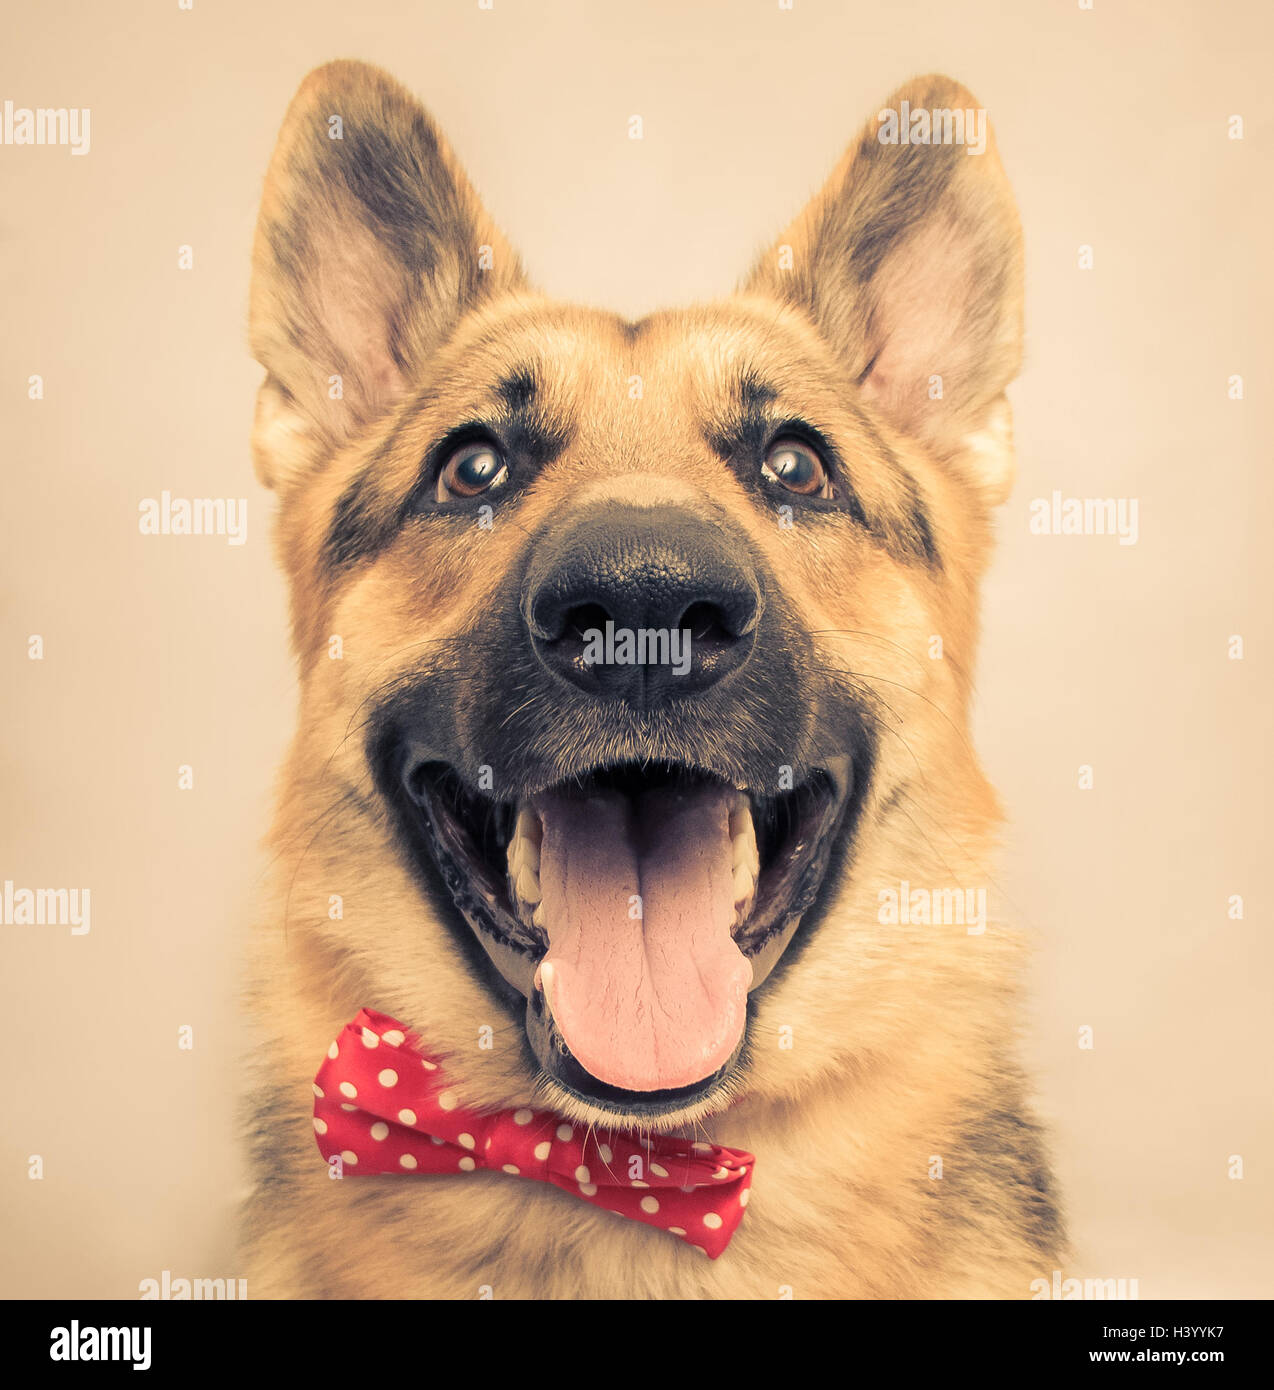 Portrait of a german shepherd dog wearing a bow tie Stock Photo